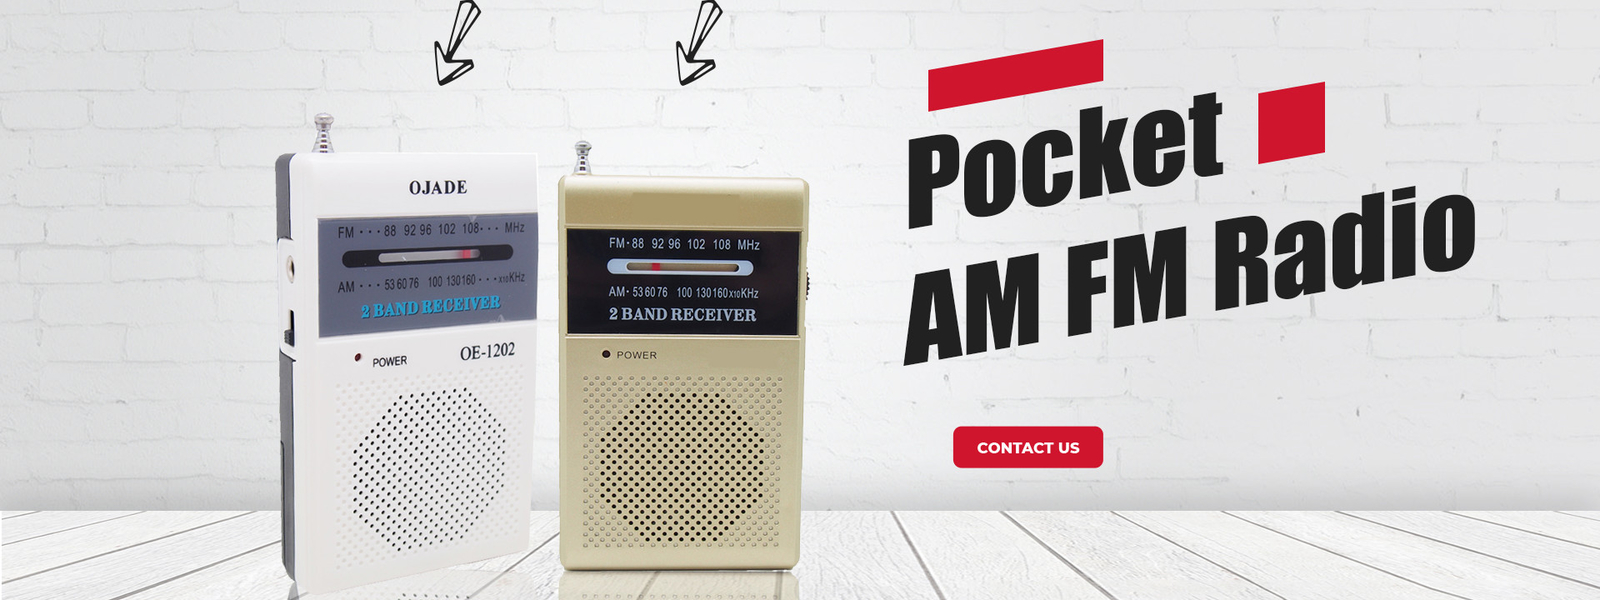 Pocket AM FM Radio